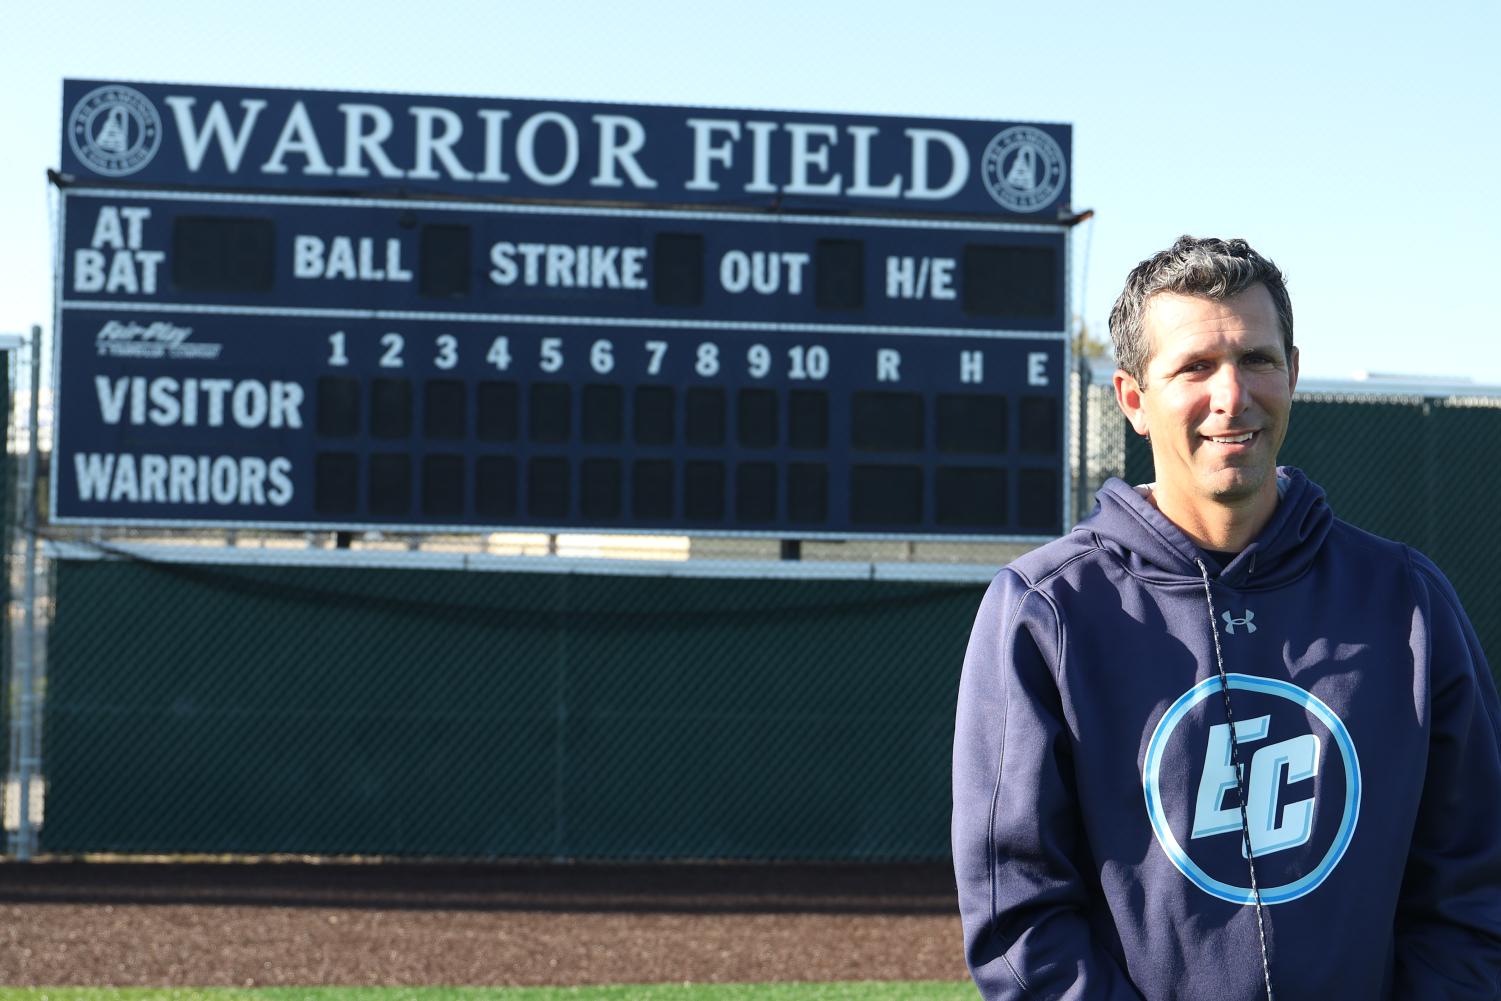 Warriors baseball coach selected as Health Educator of the Year